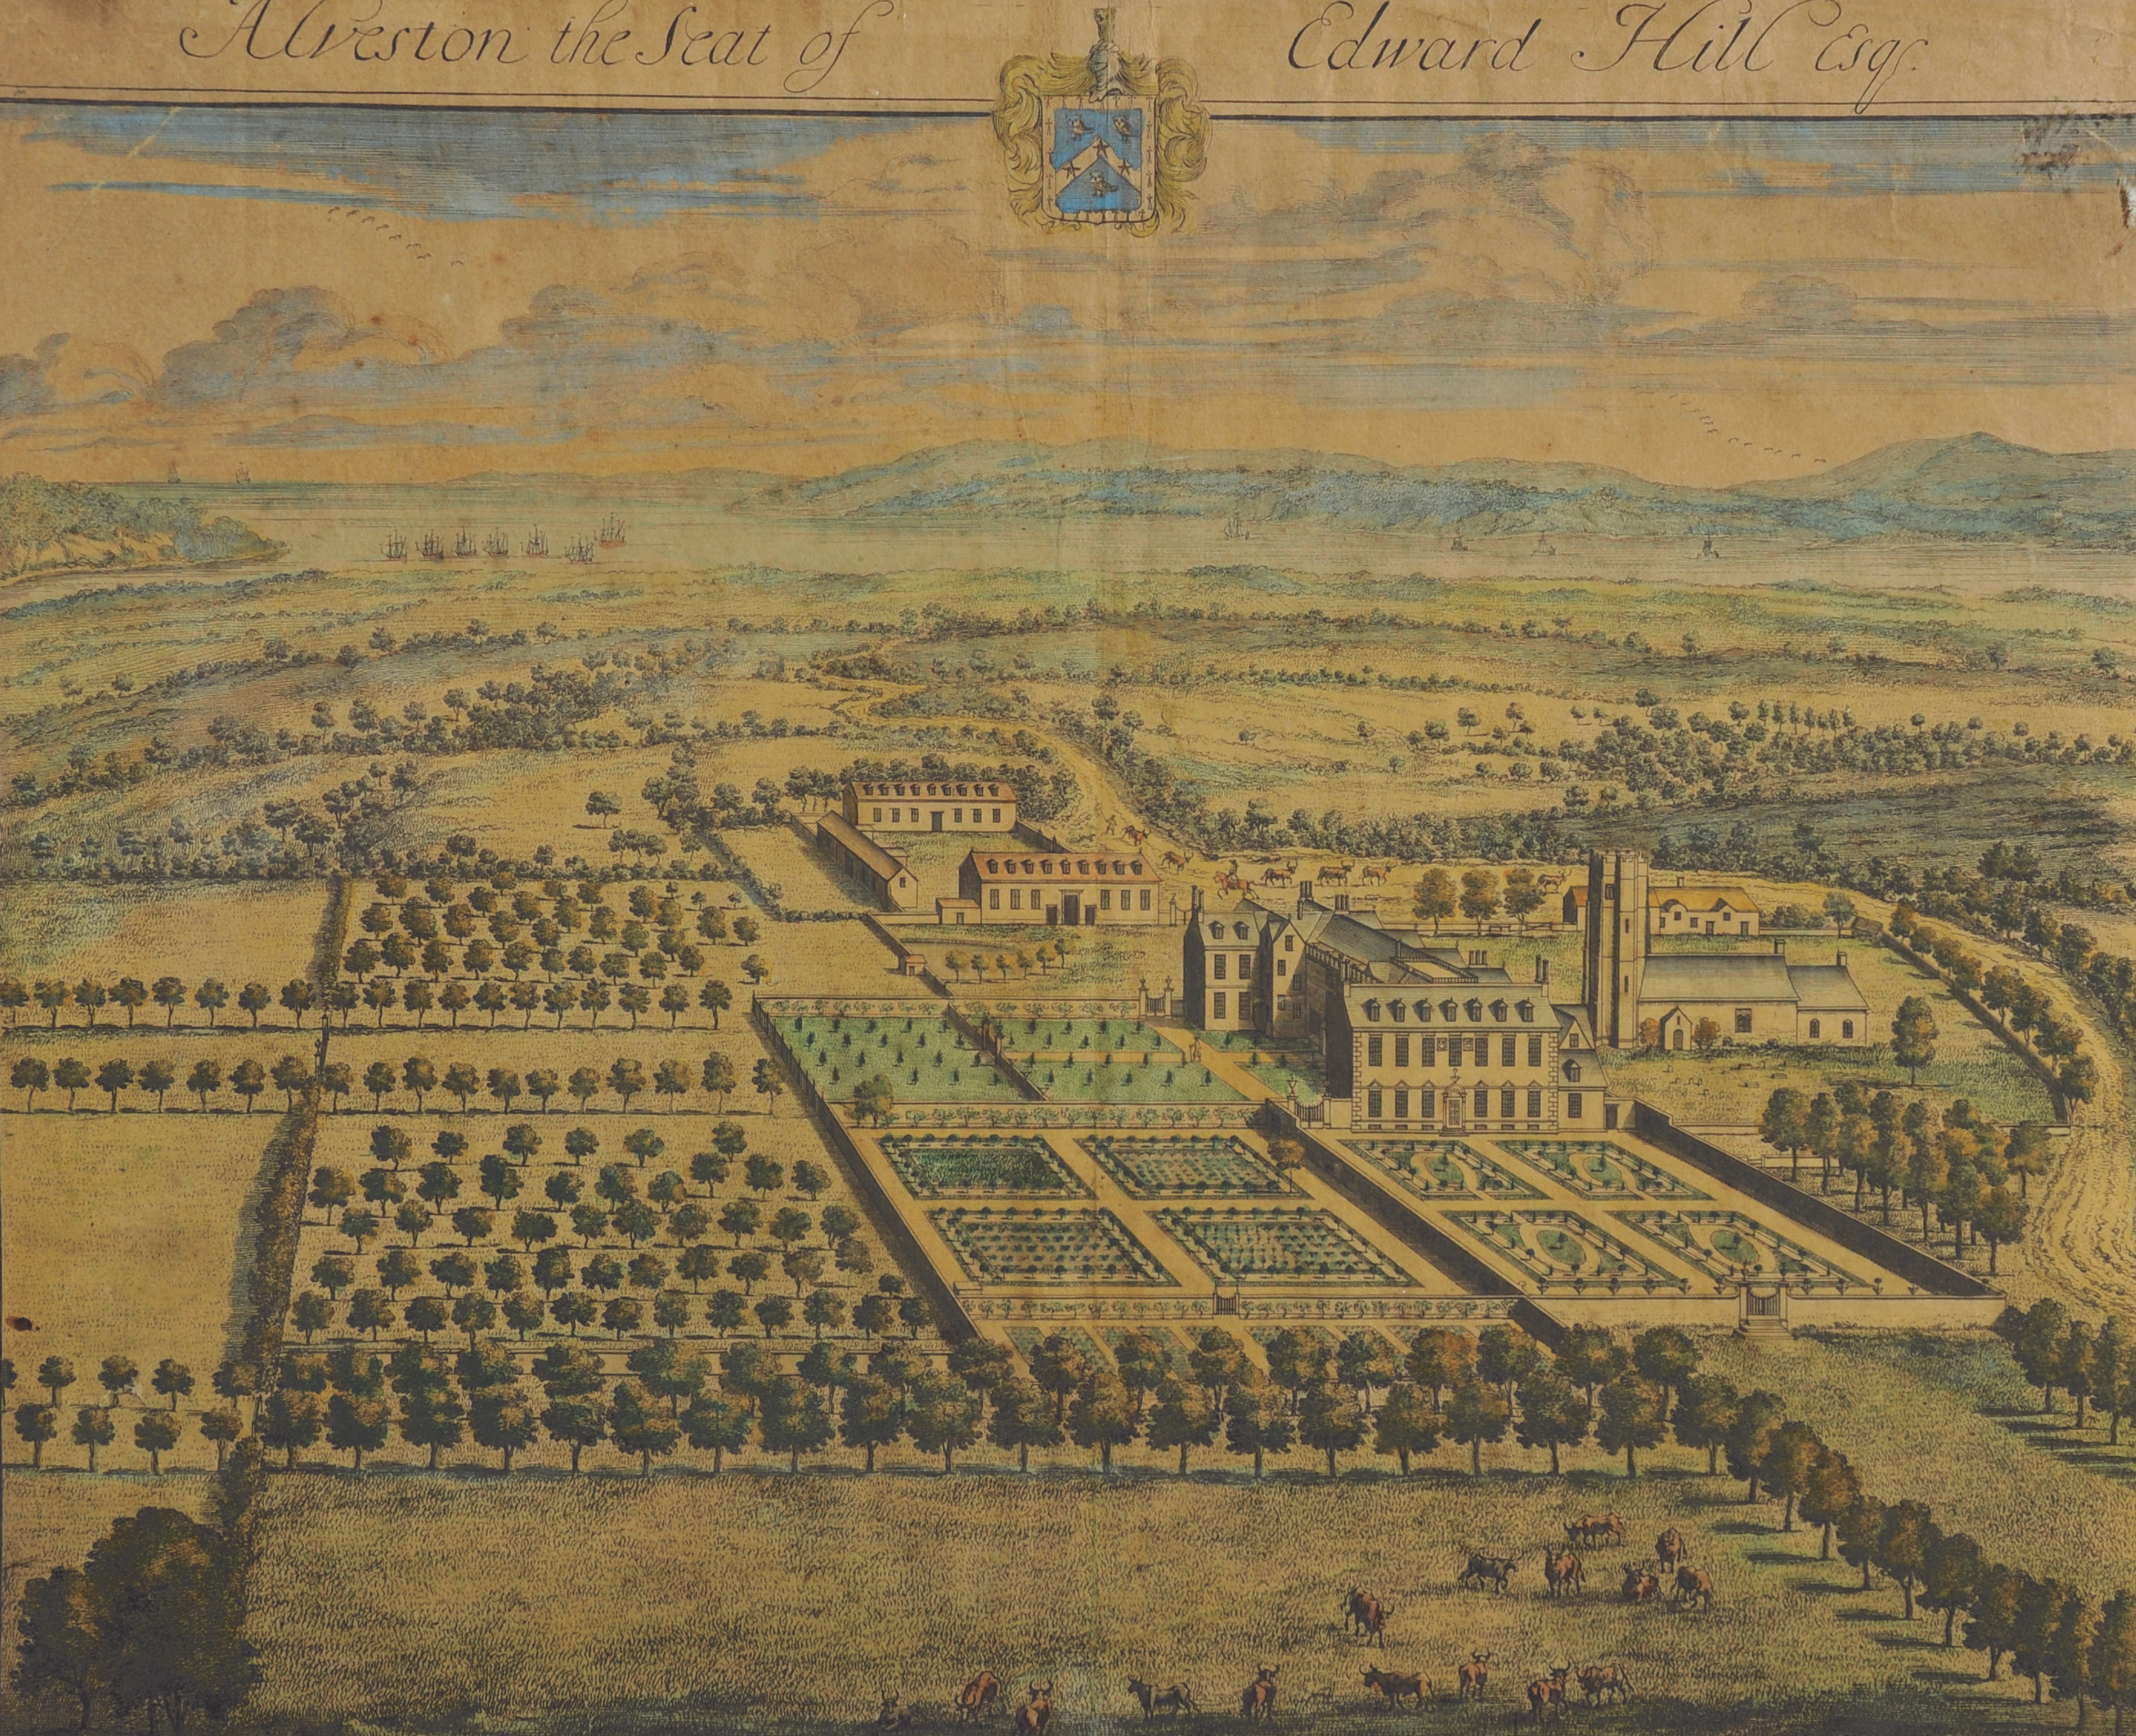 After Johannes Kip (c.1653-1722) Dutch. "Alveston, the Seat of Edward Hill Esq", Print, overall